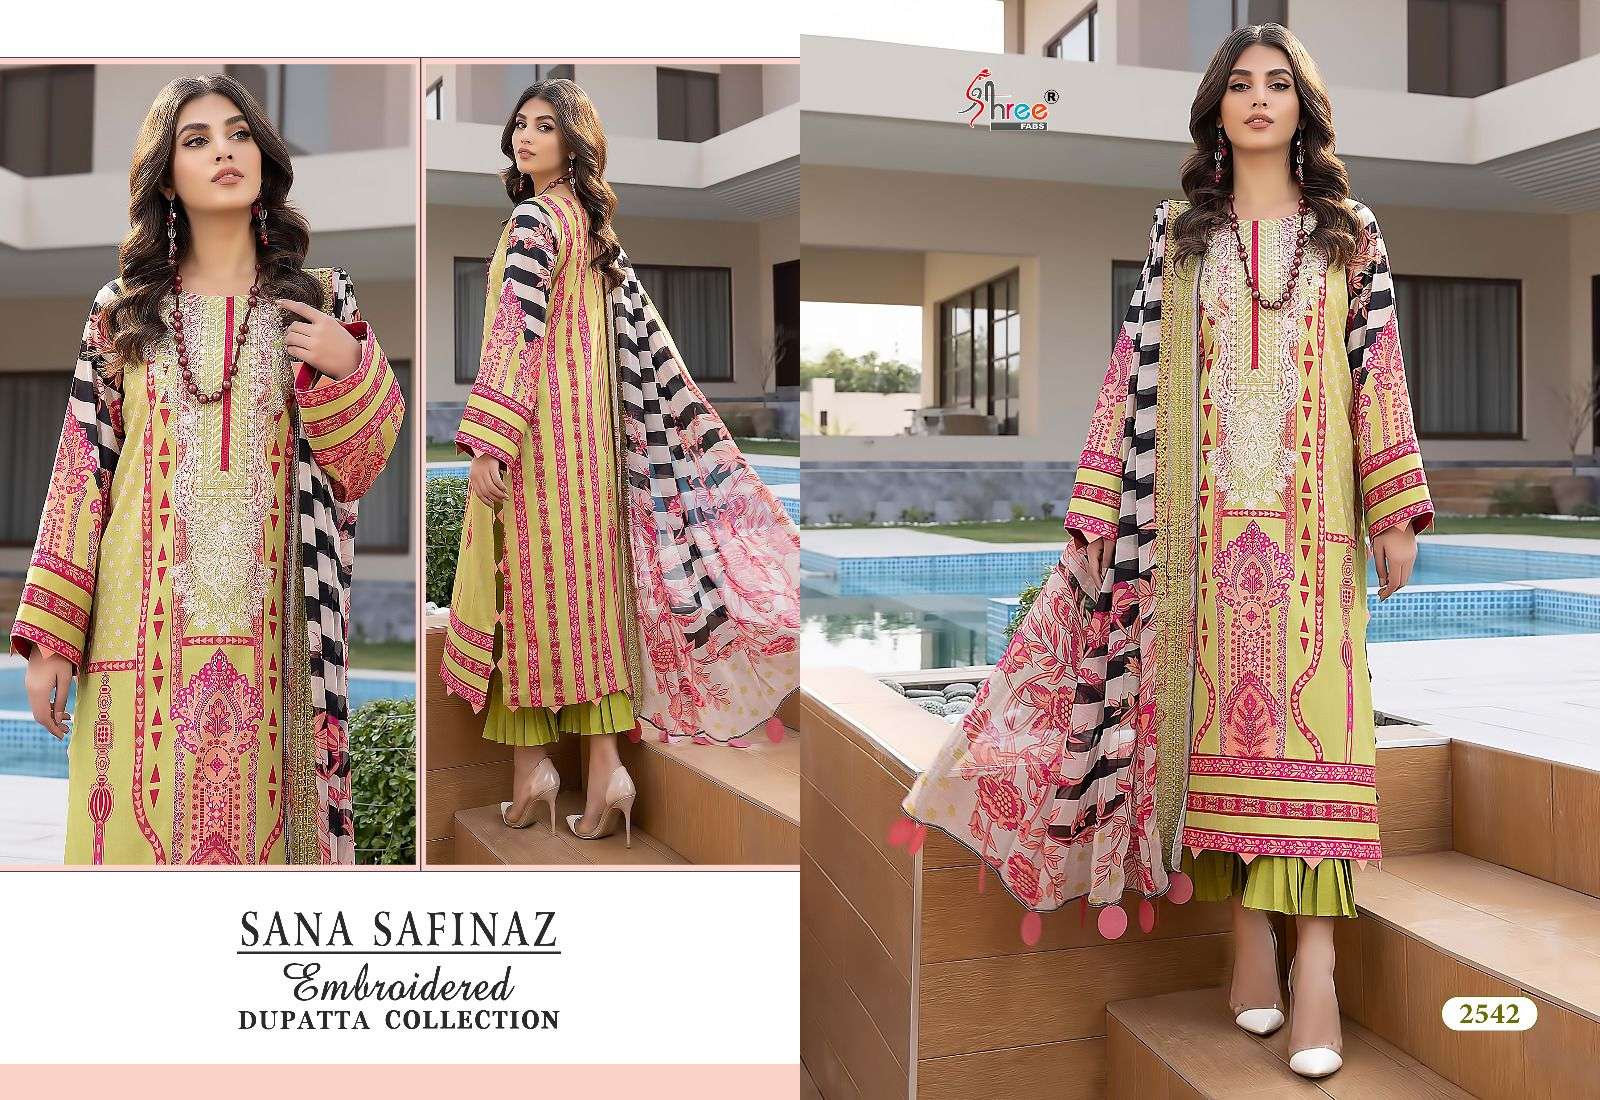 shree fabs sana safinaz embroidered dupatta collection 2537-2542 series pakistani salwar kameez surat